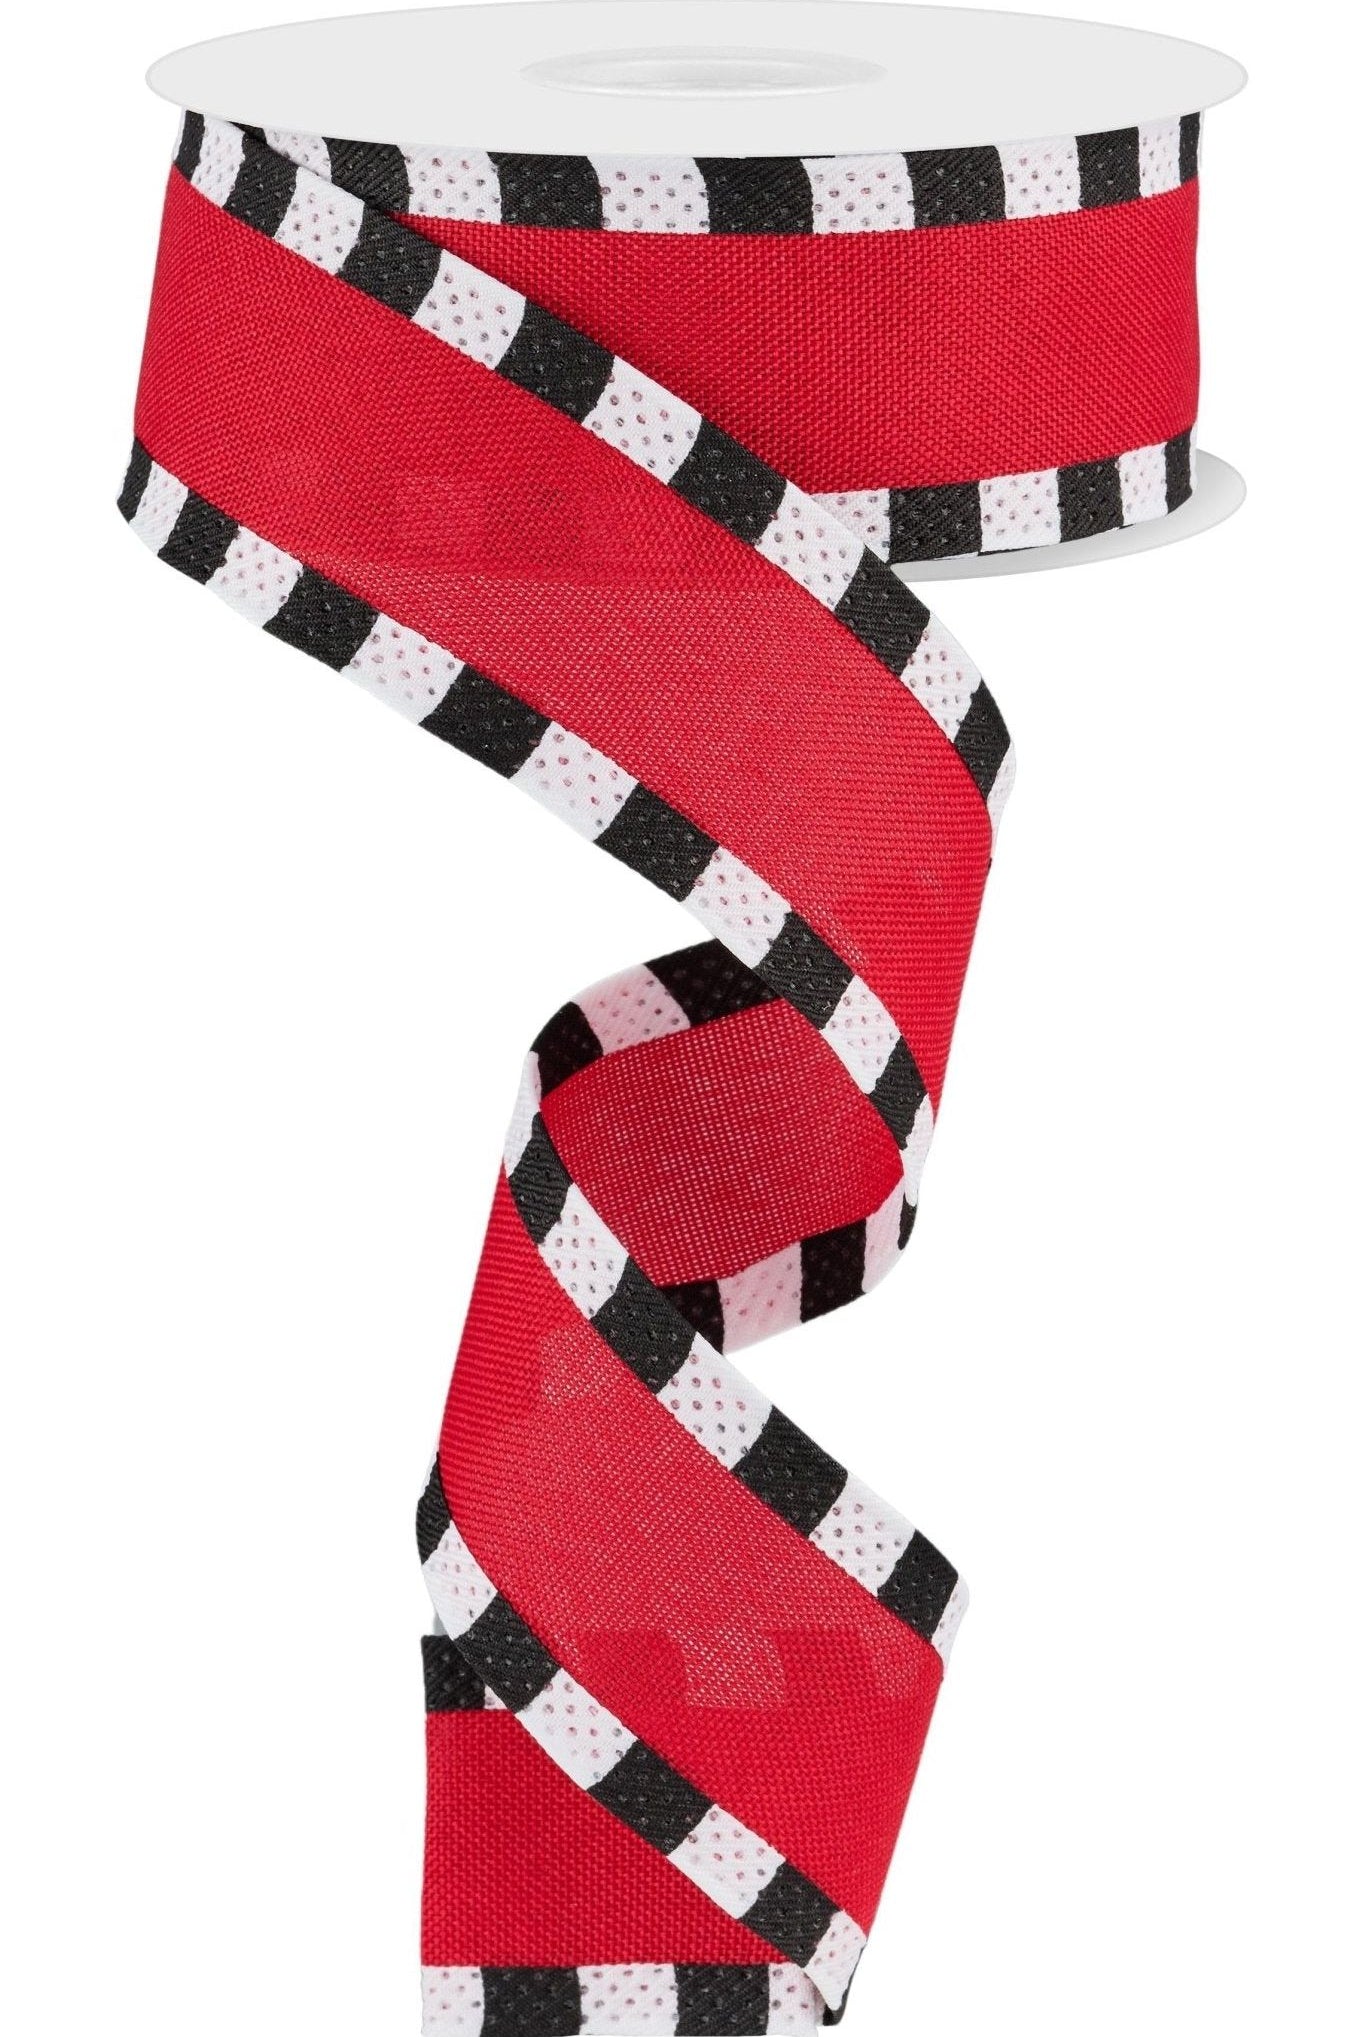 Shop For 1.5" Faux Royal Burlap/Stripe Edge Ribbon: Red (10 Yards) RGC8134CM